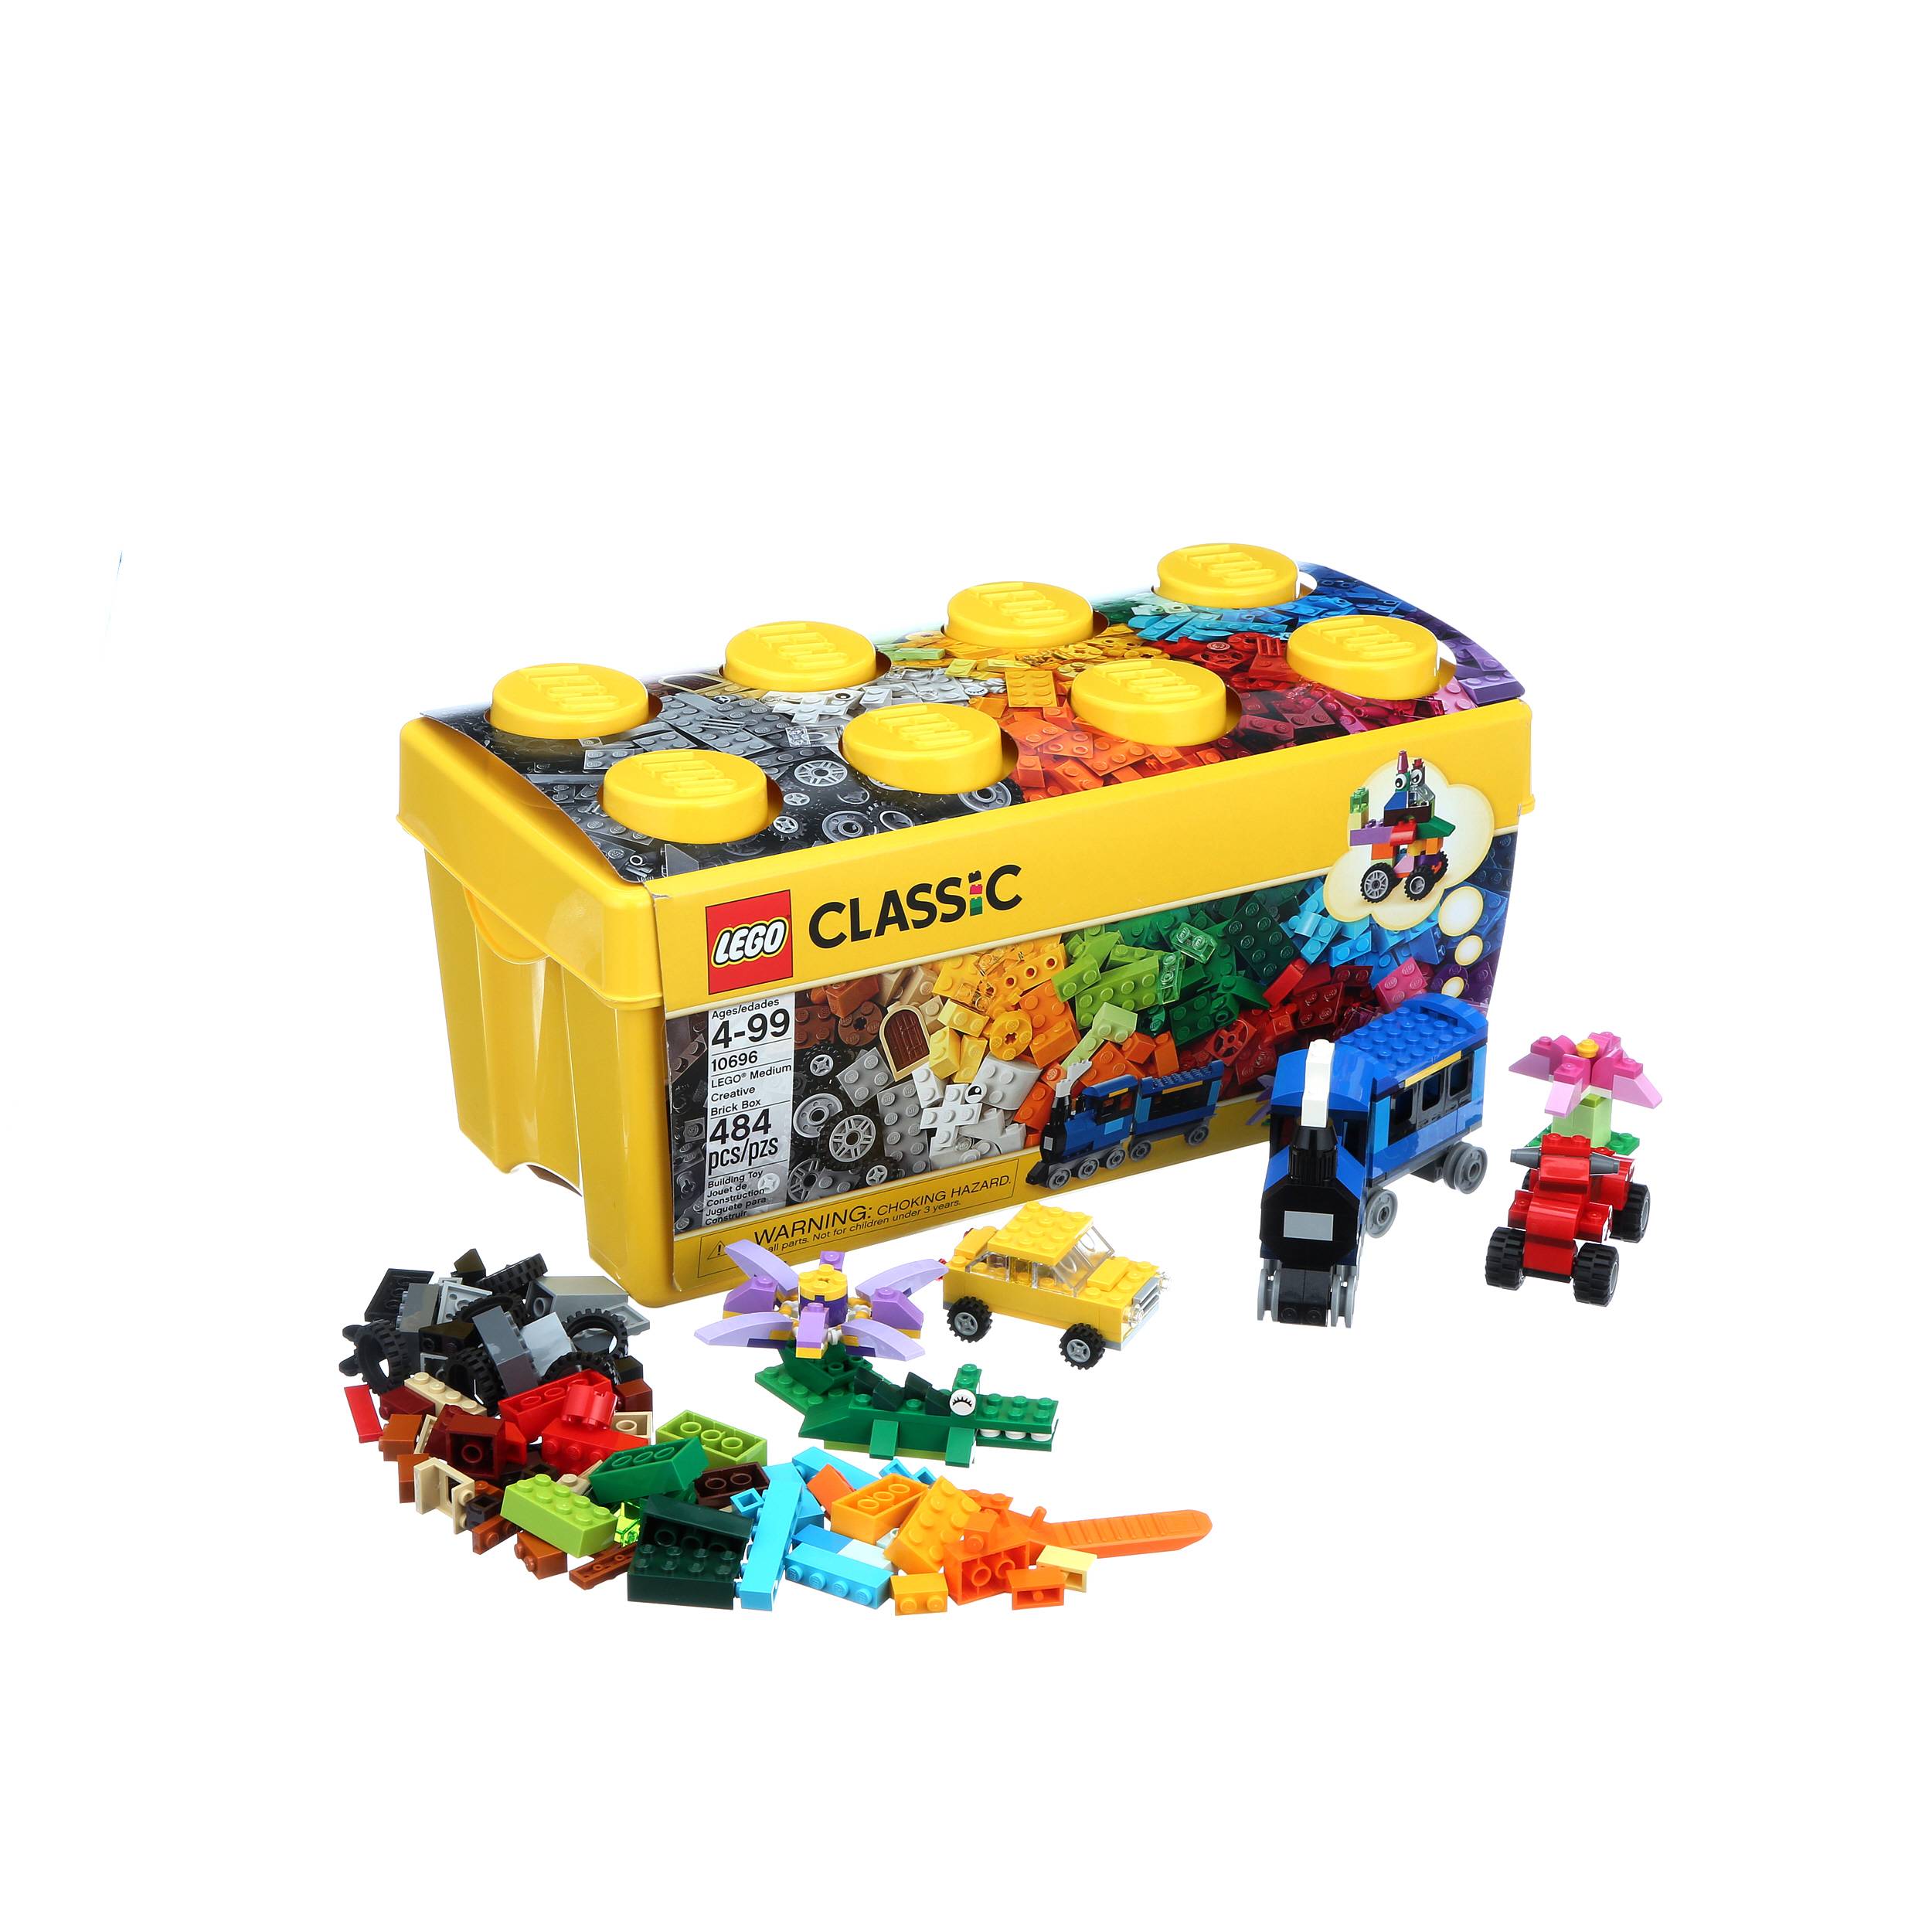 484 piece lego set